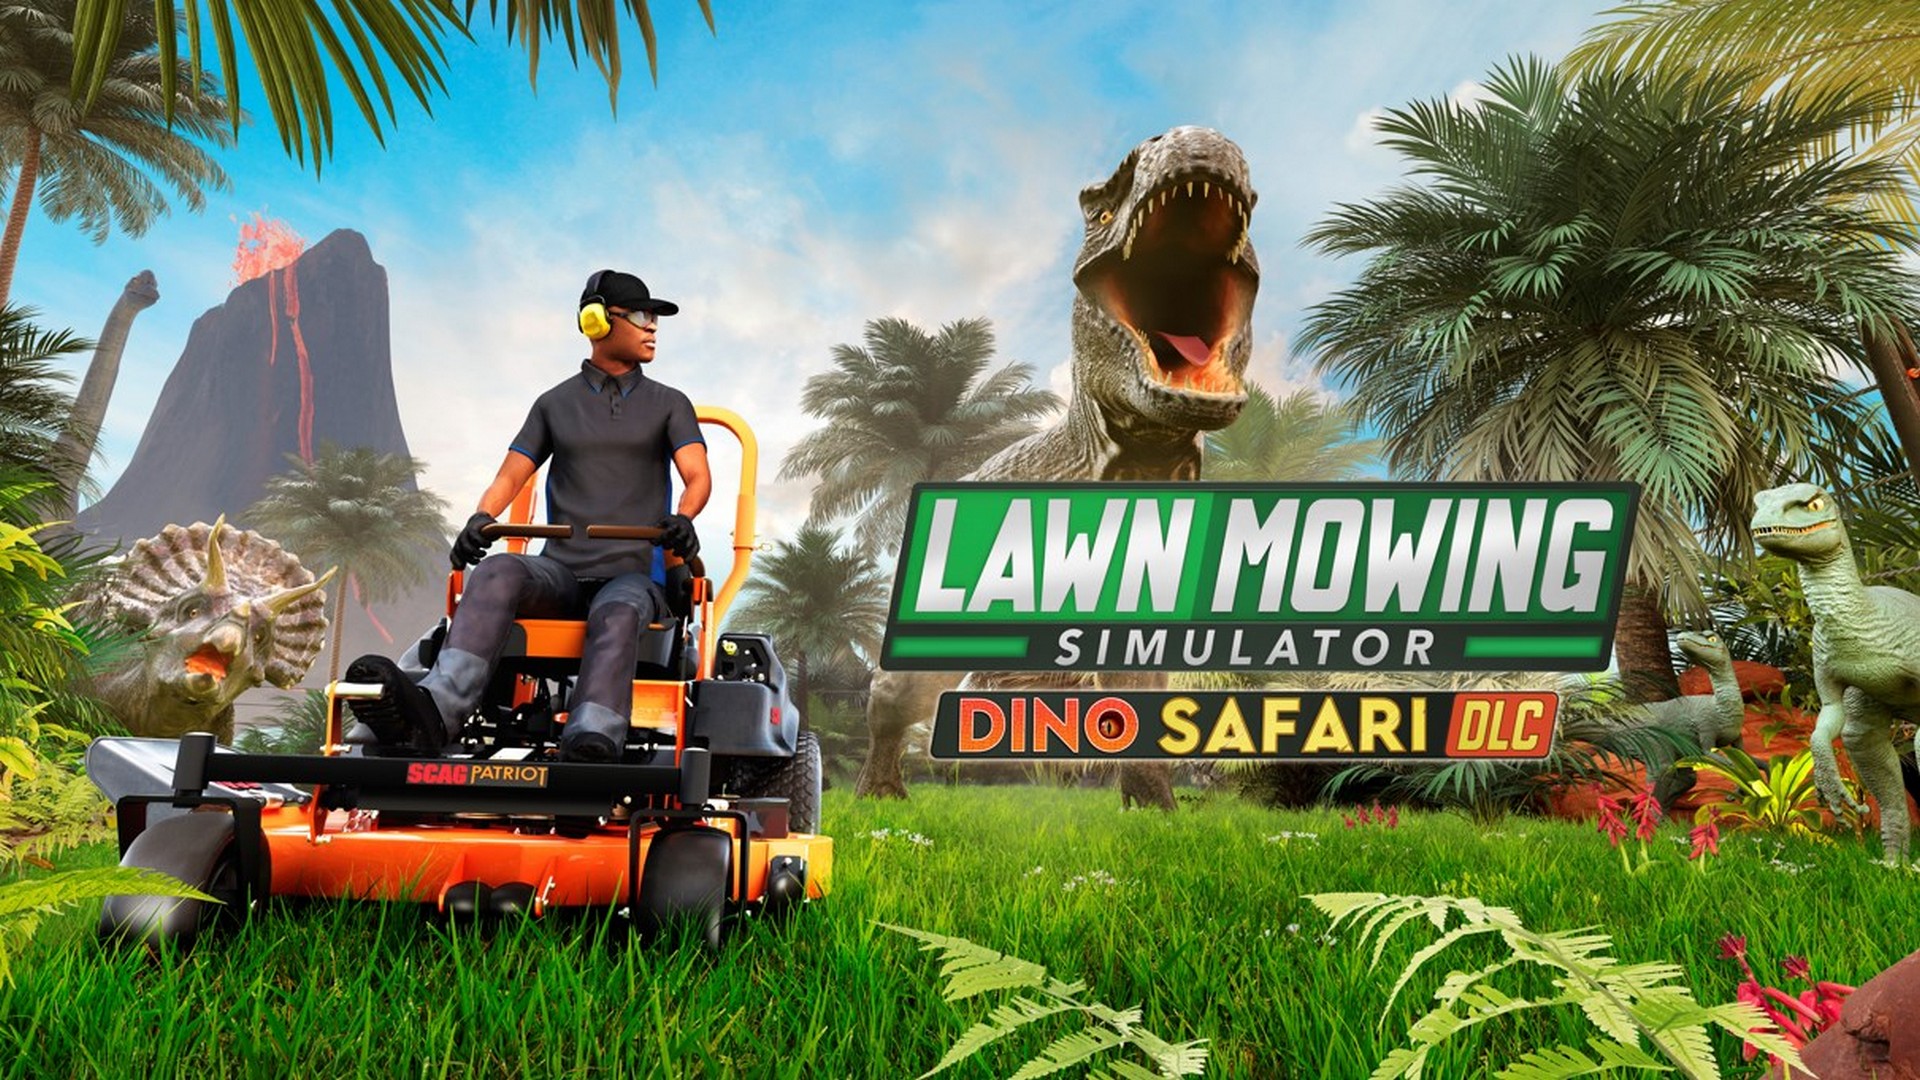 Lawn Mowing Simulator Launches New Dino Safari DLC Today